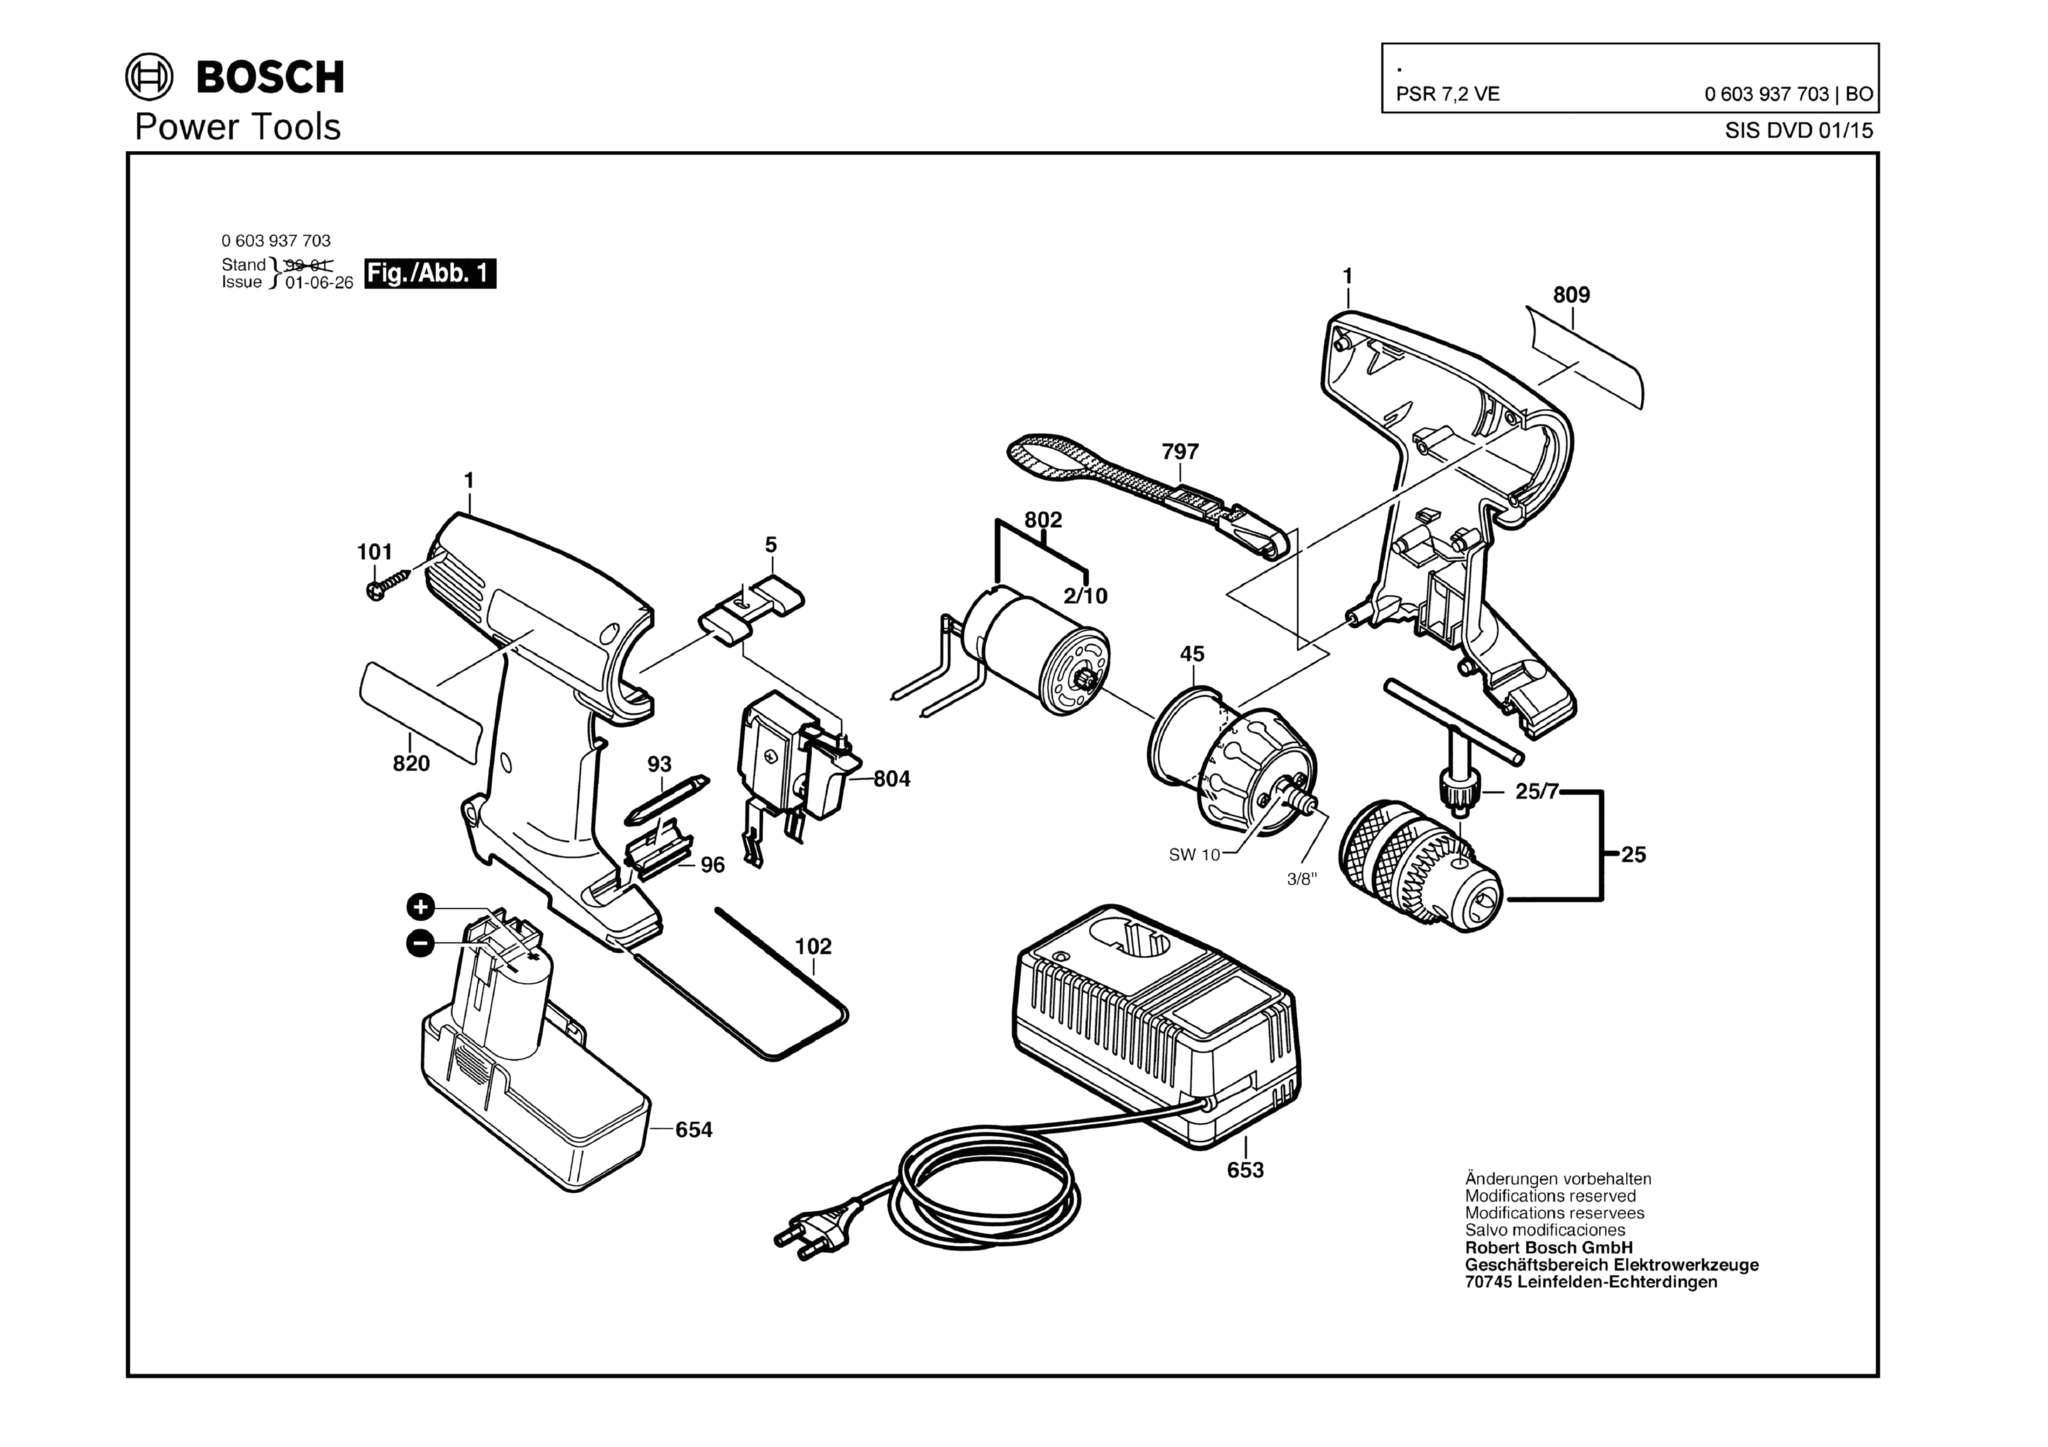 Запчасти, схема и деталировка Bosch PSR 7,2 VE (ТИП 0603937703)